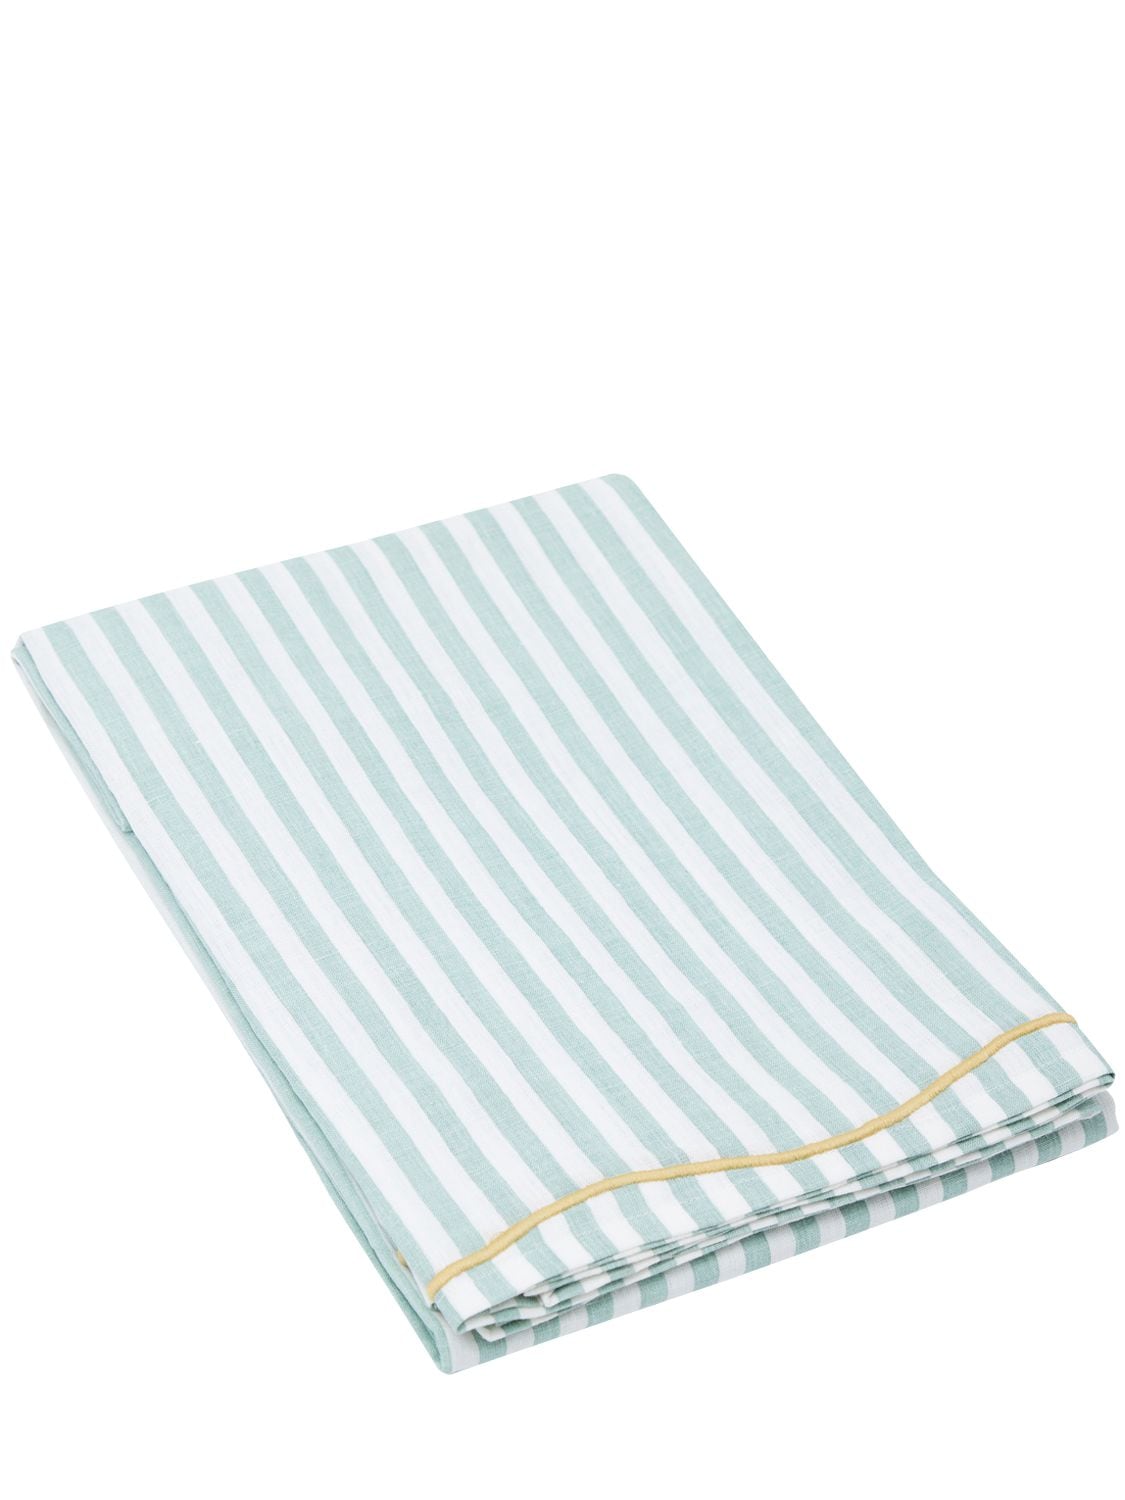 Le Sol Striped Tablecloth – HOME > TEXTILES & LINENS > TABLE LINENS